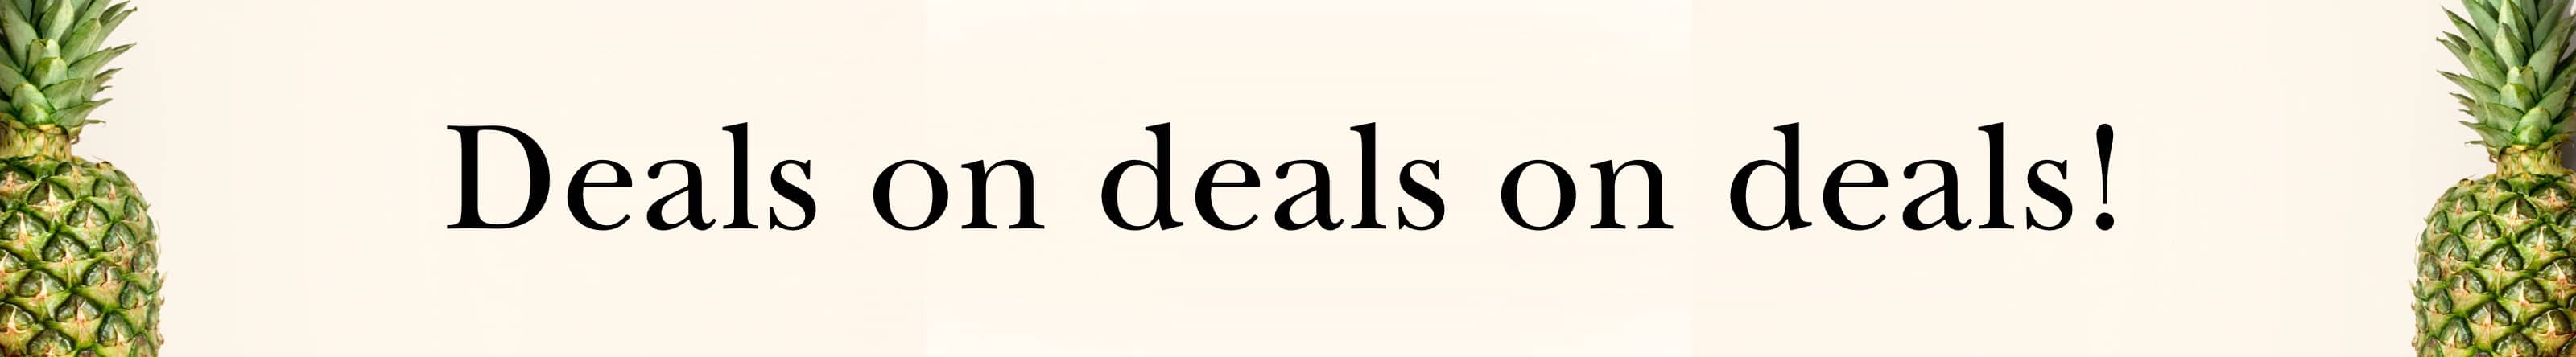 deals on deals on deals!